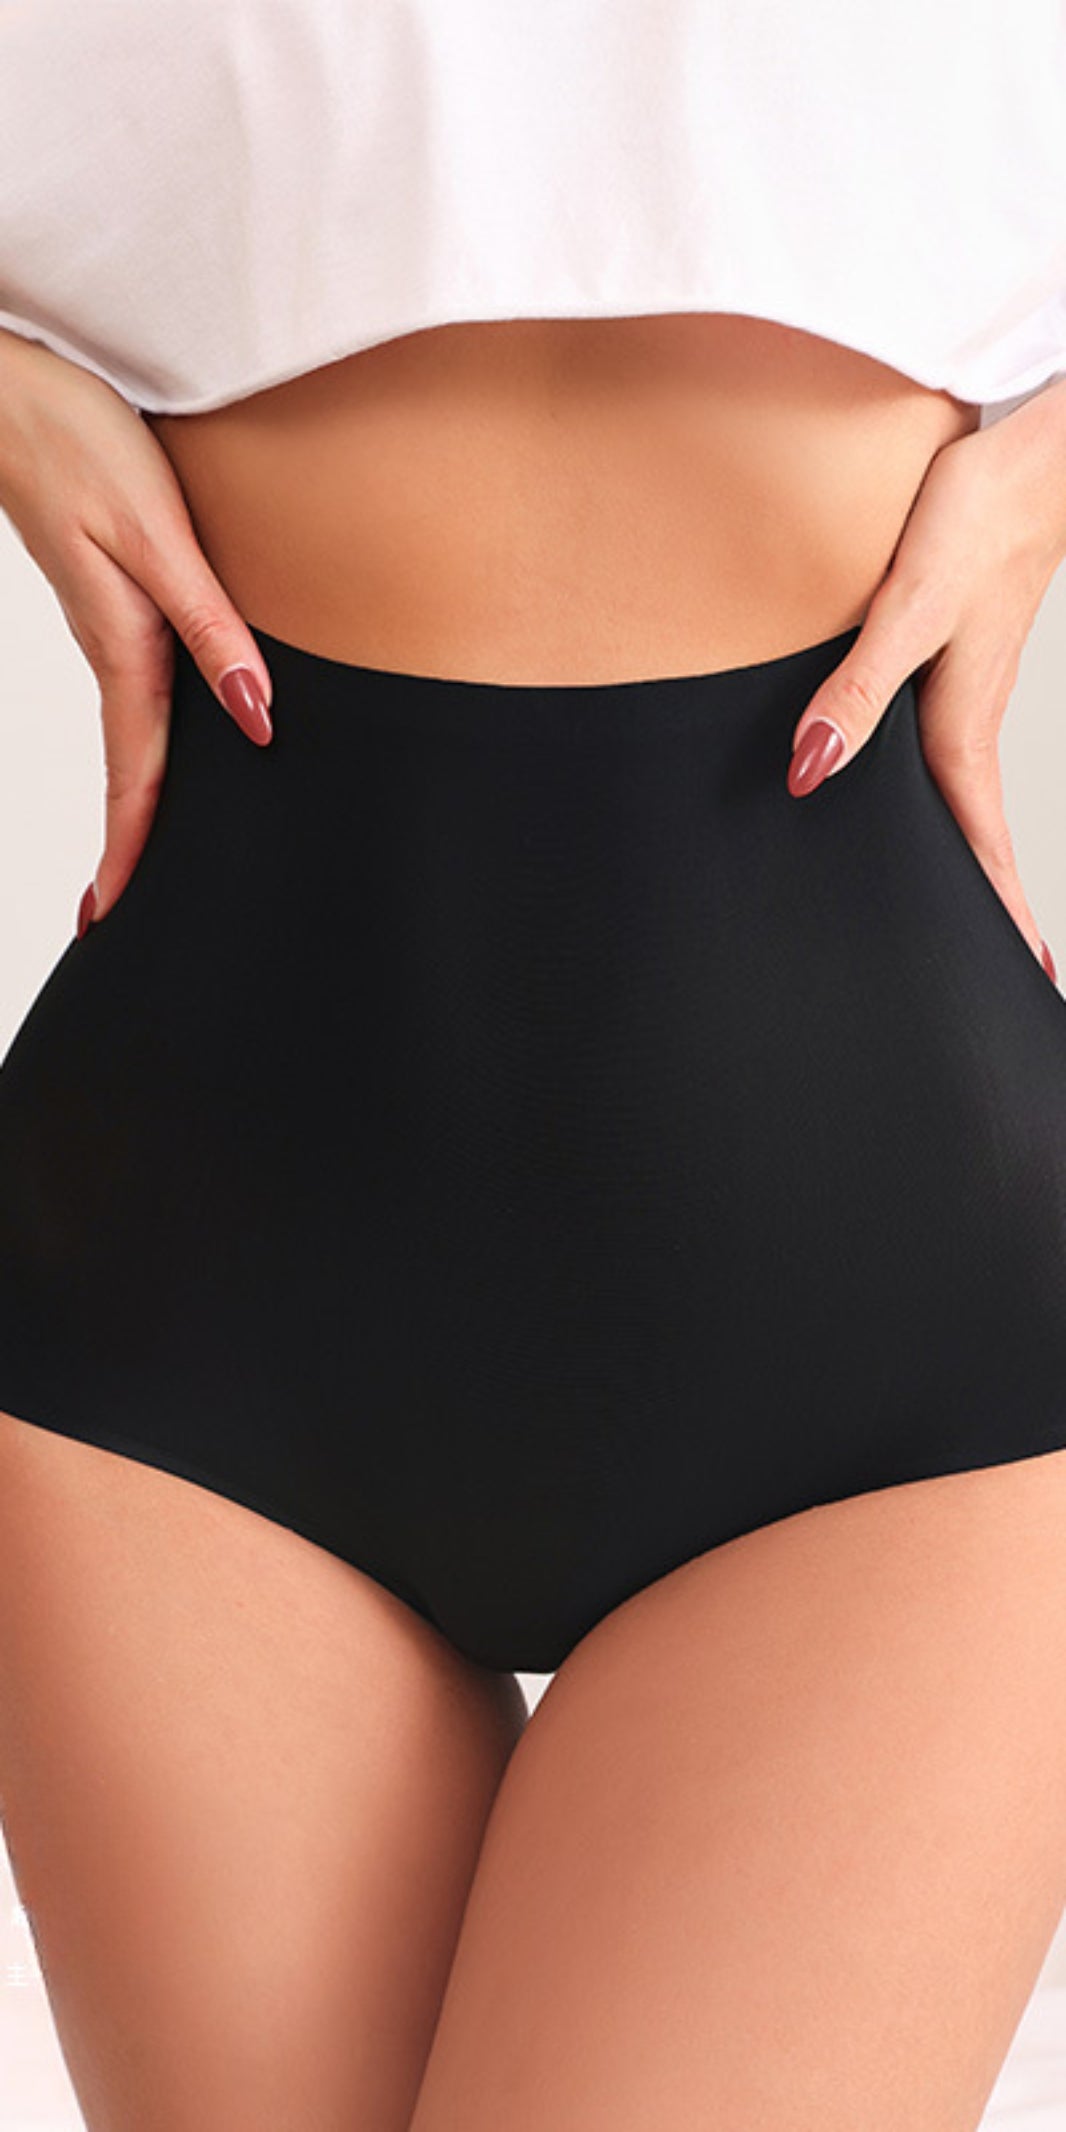 Large Size High Waist Cotton Crotch Menstrual Panties